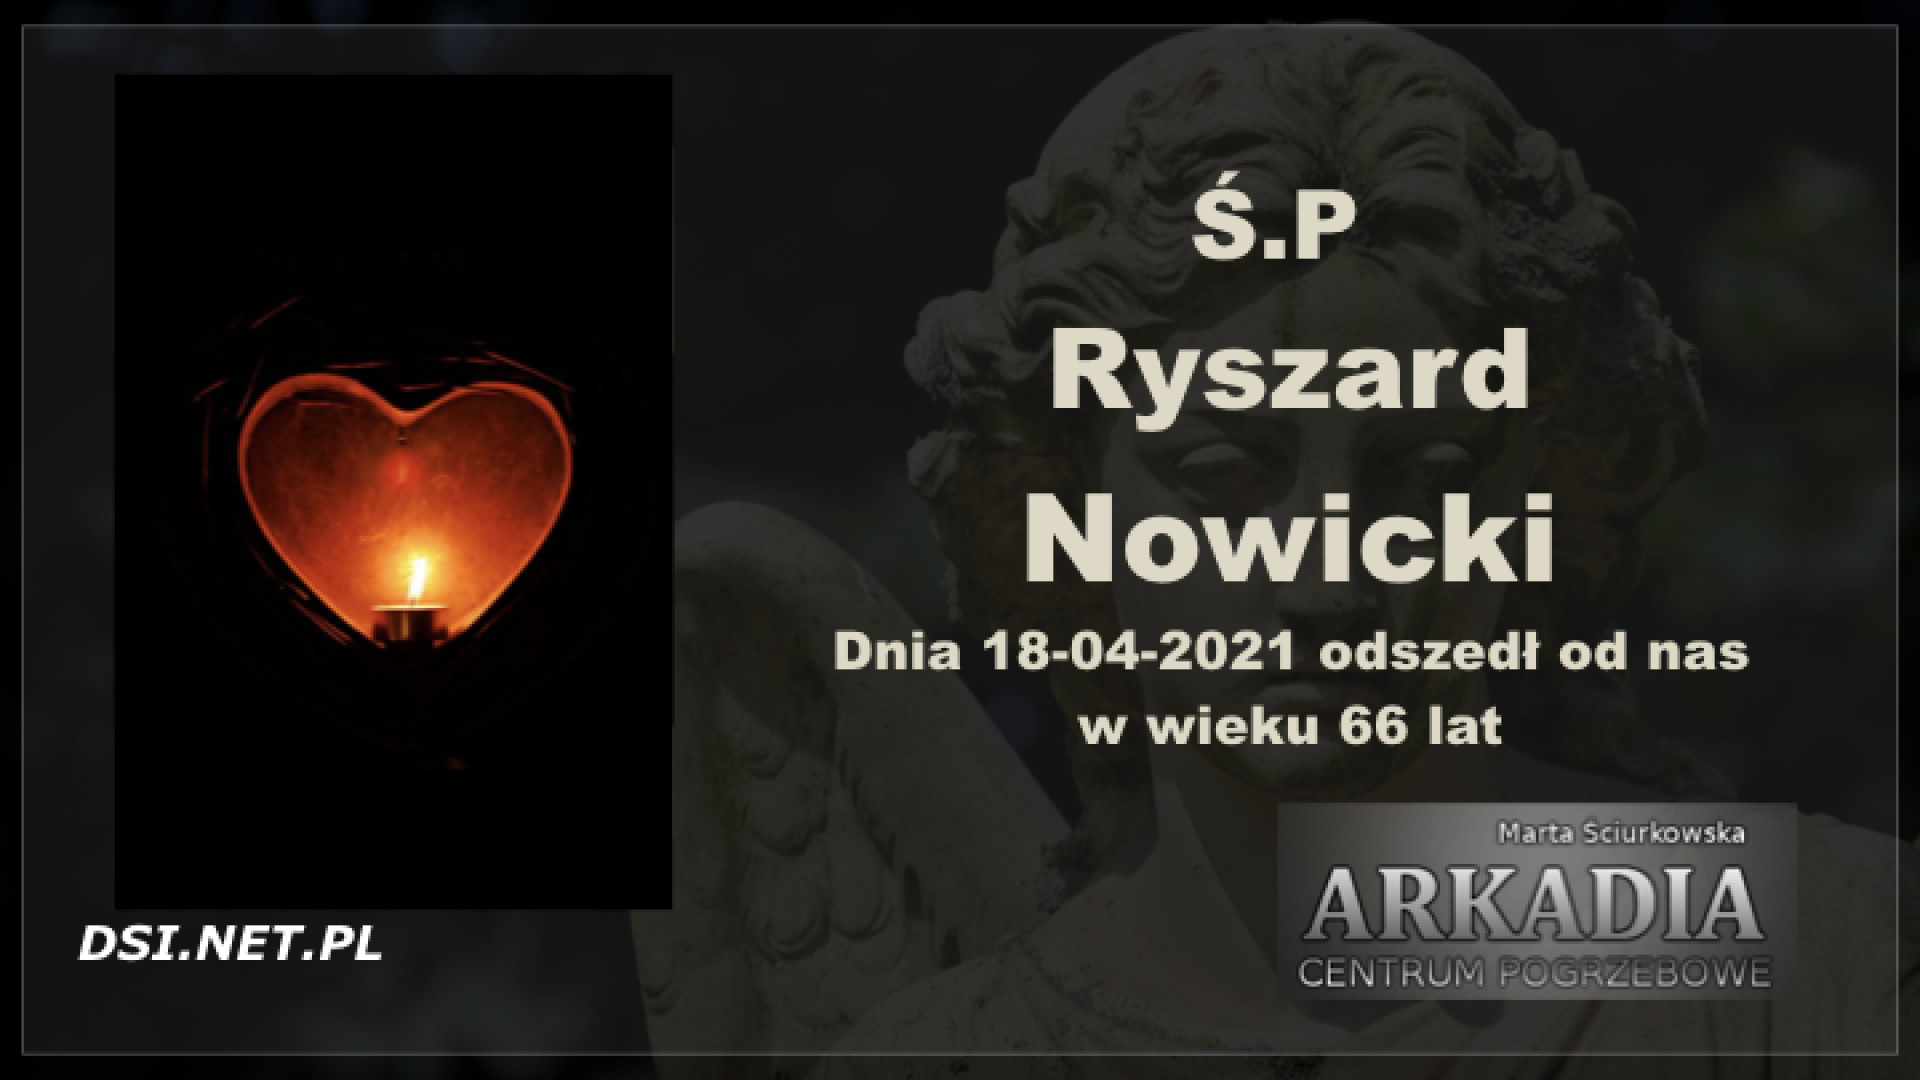 Ś.P. Ryszard Nowicki